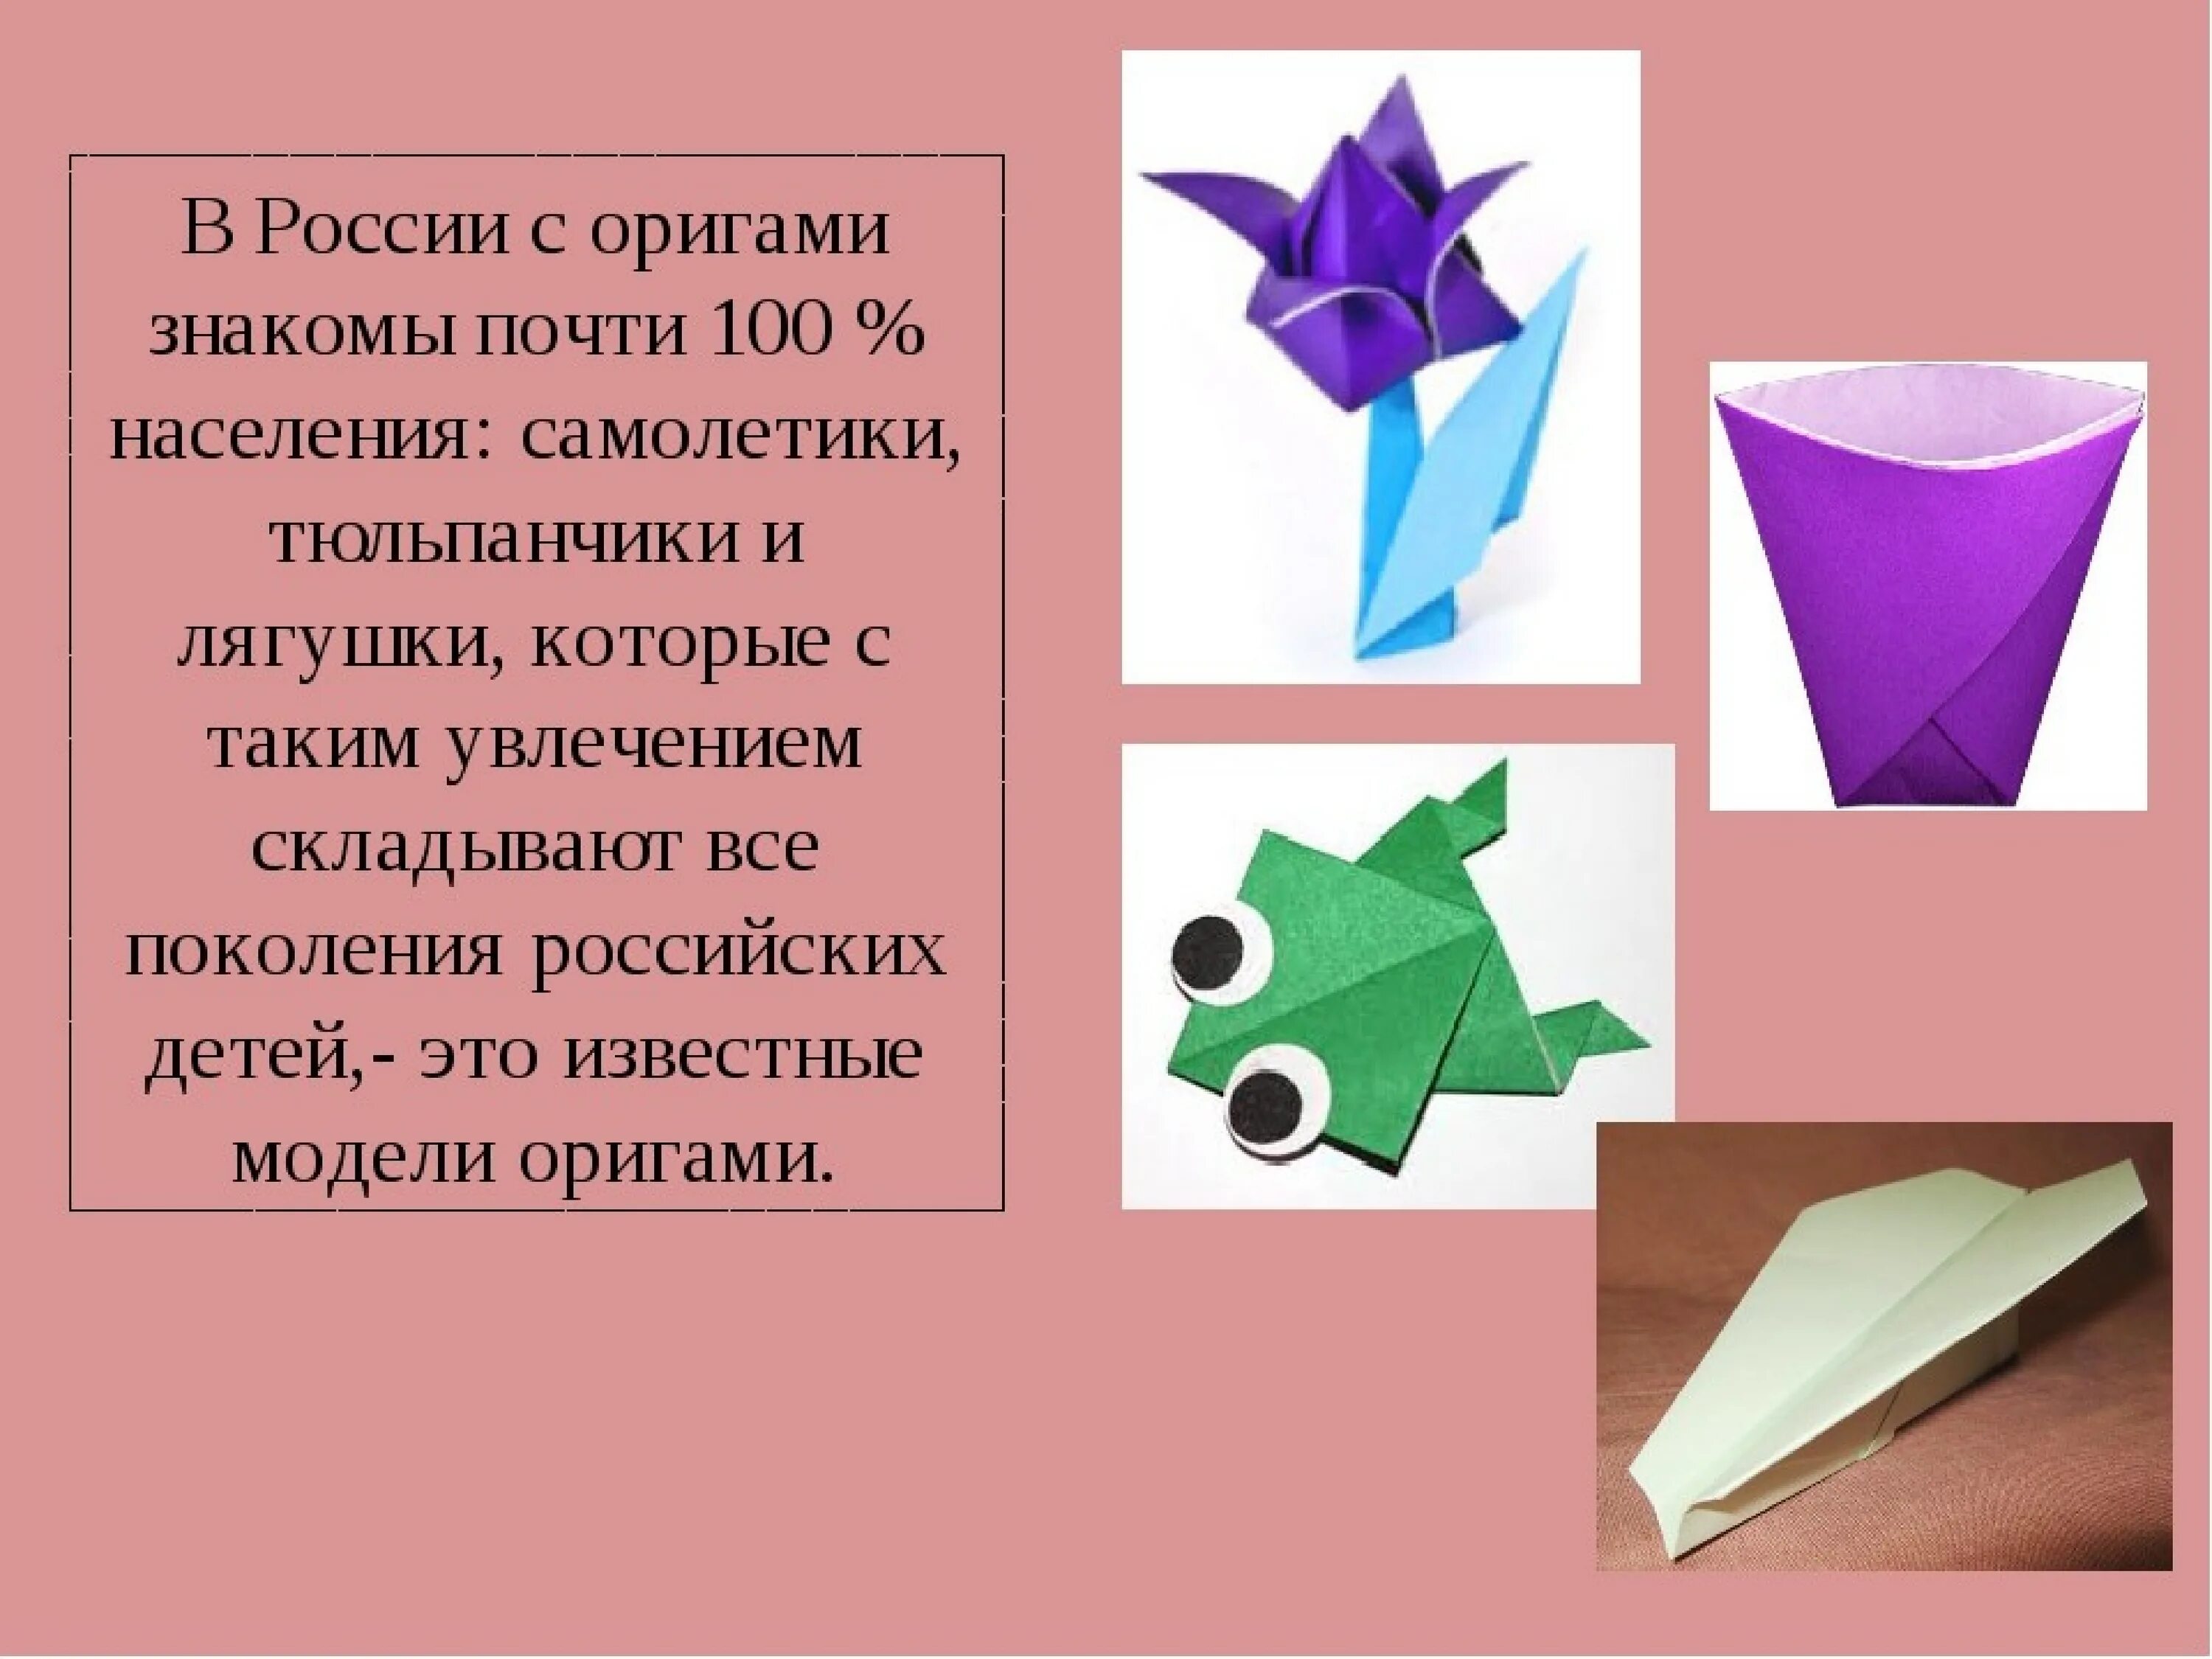 Оригами презентация. Тема оригами. Презентация по оригами для детей. Презентация на тему оригами для дошкольников. Задания оригами